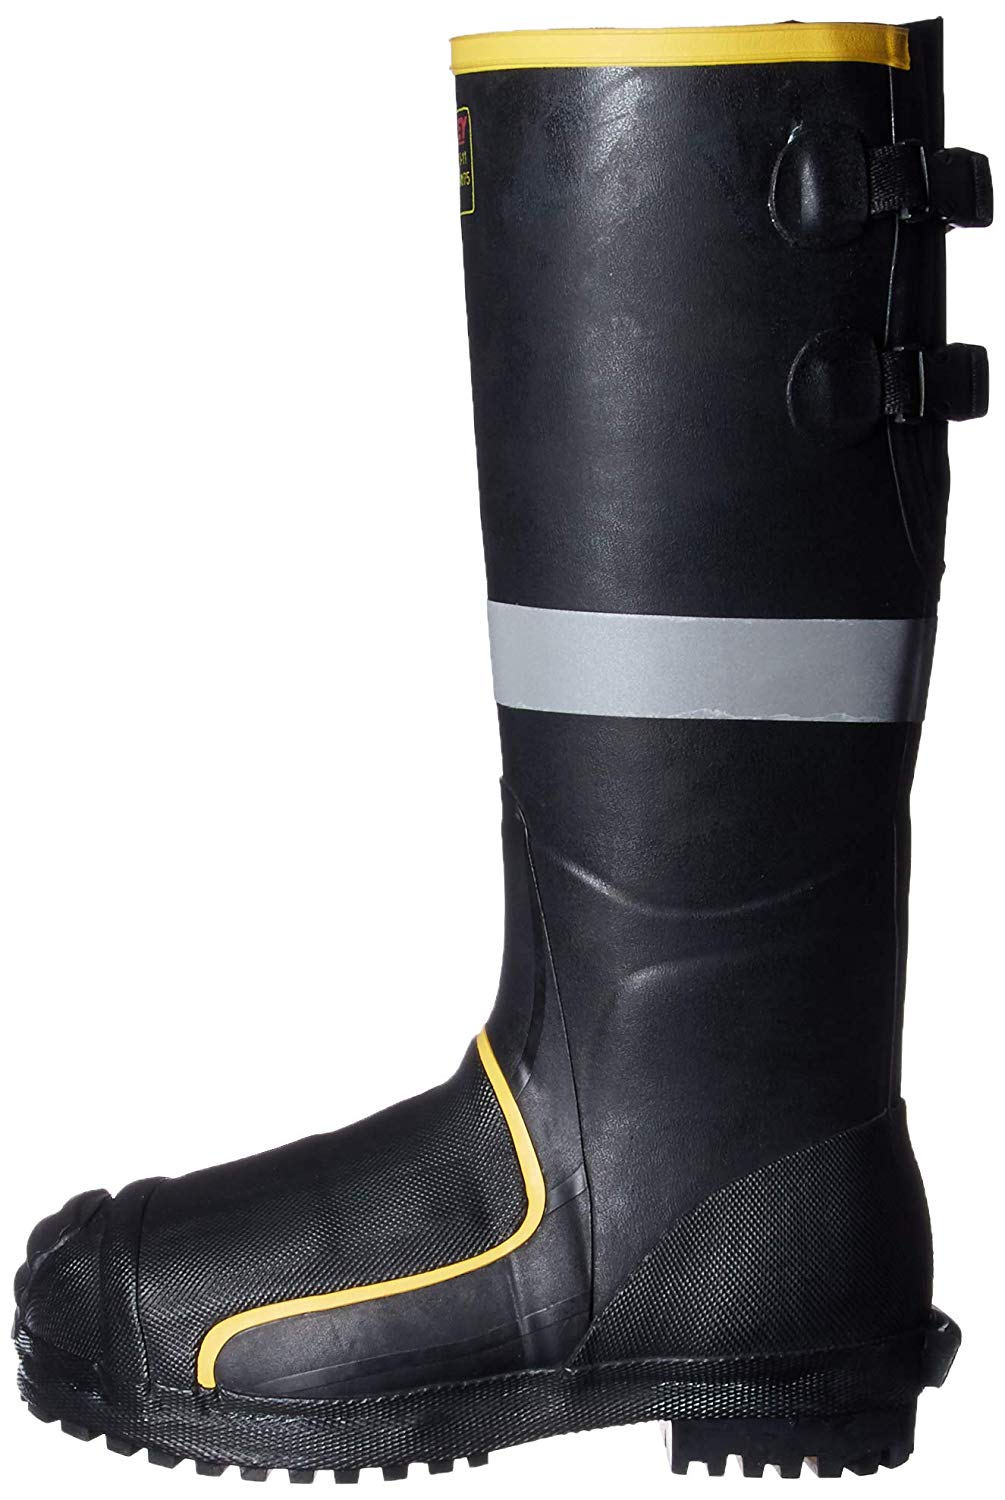 steel metatarsal boots